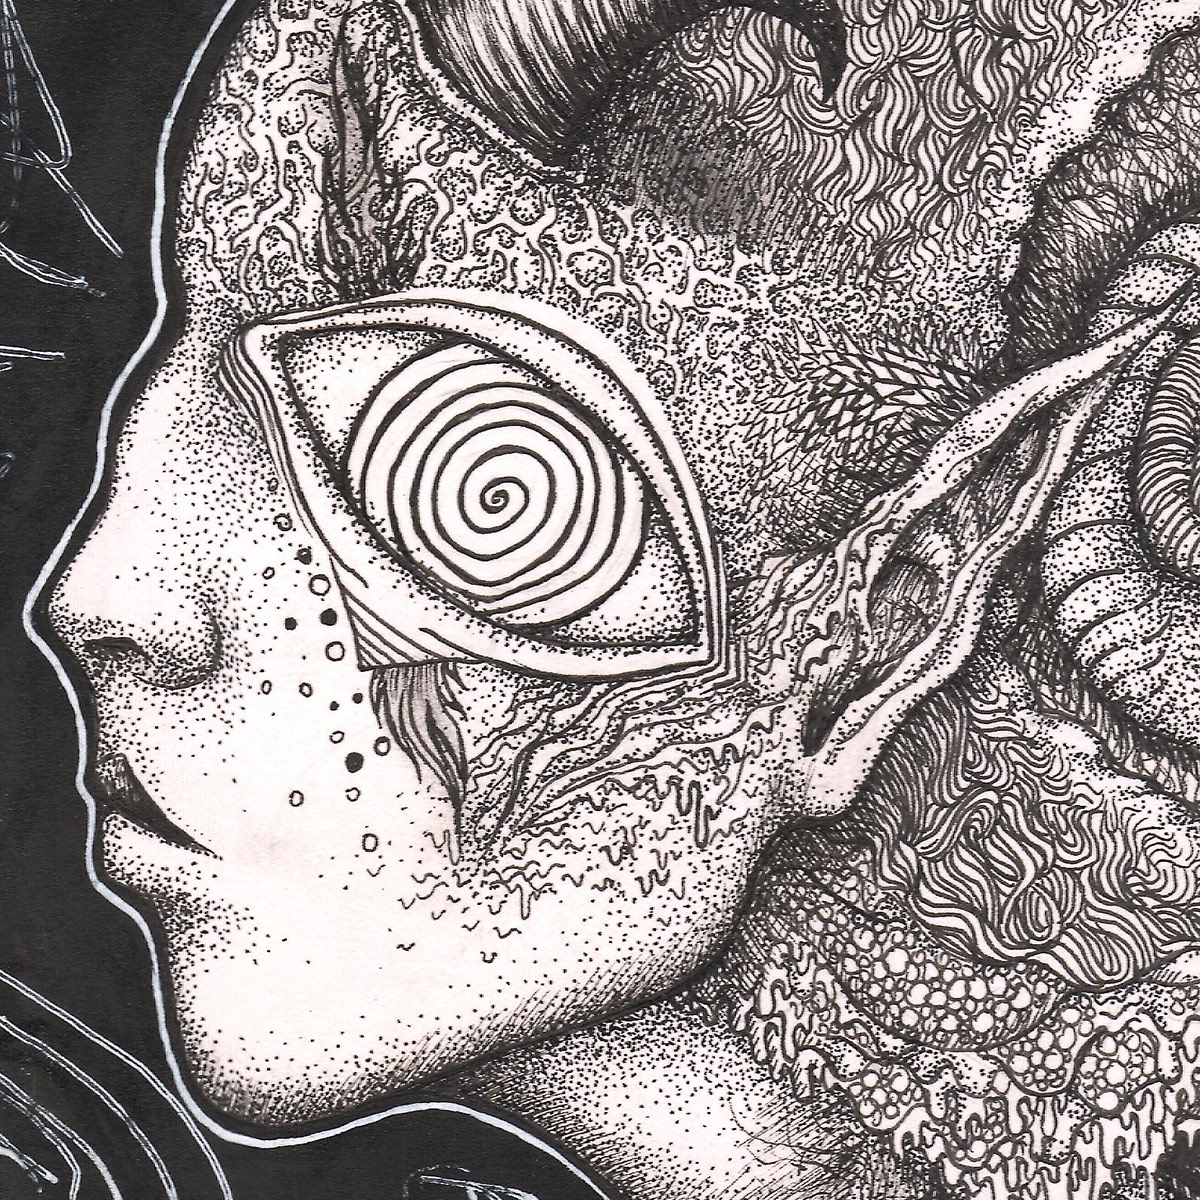 FINEART Drawing  detailed psychedelic bizarre TRADITIONAL ART ILLUSTRATION  handmade dark art surrealism